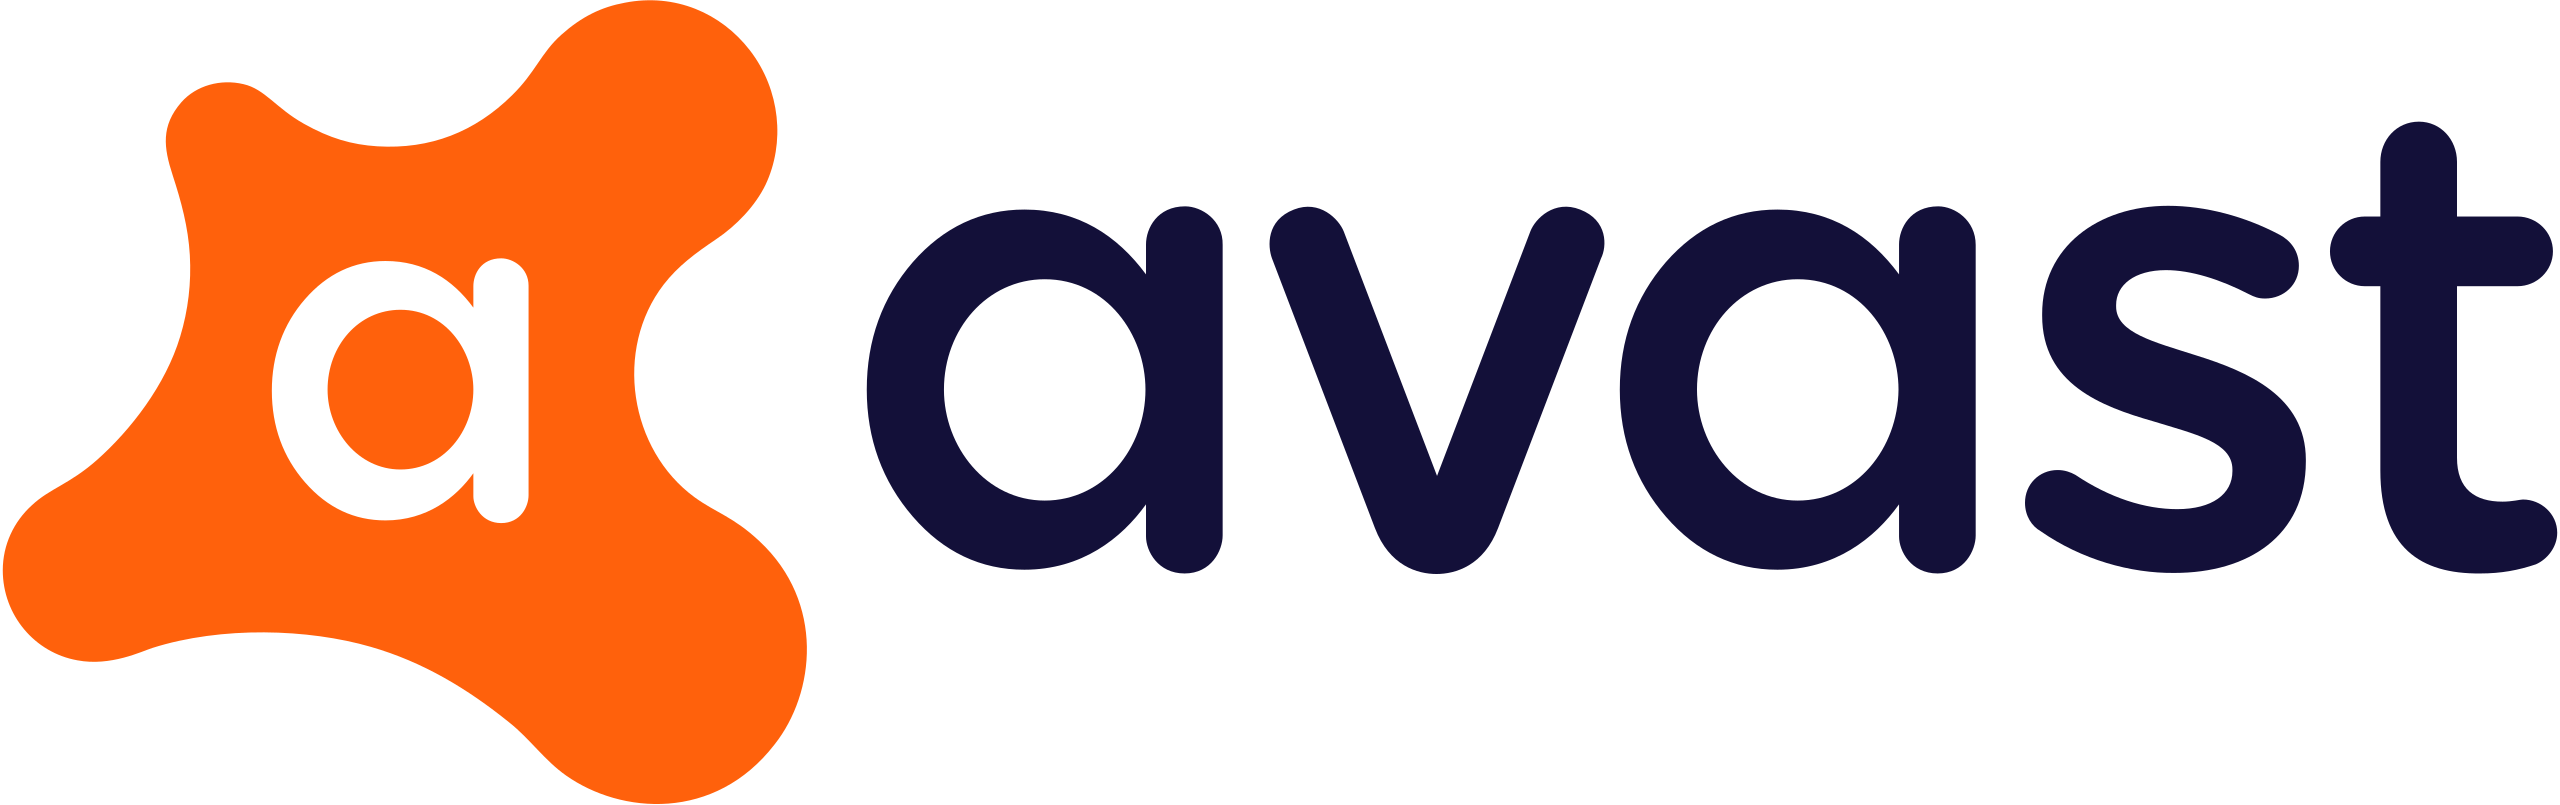 avast_logo.png